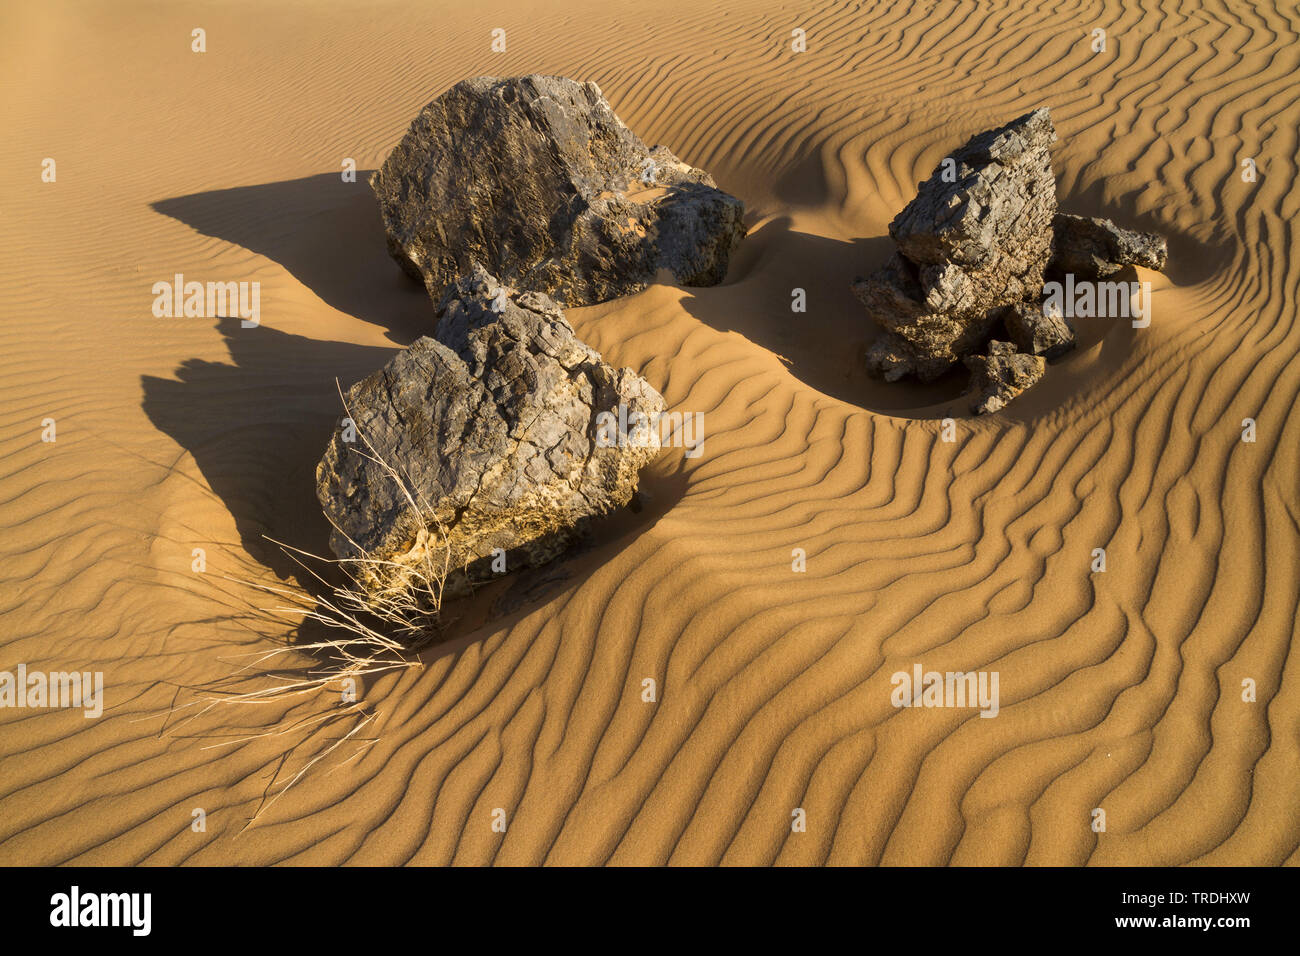 central desert of Oman, Oman Stock Photo